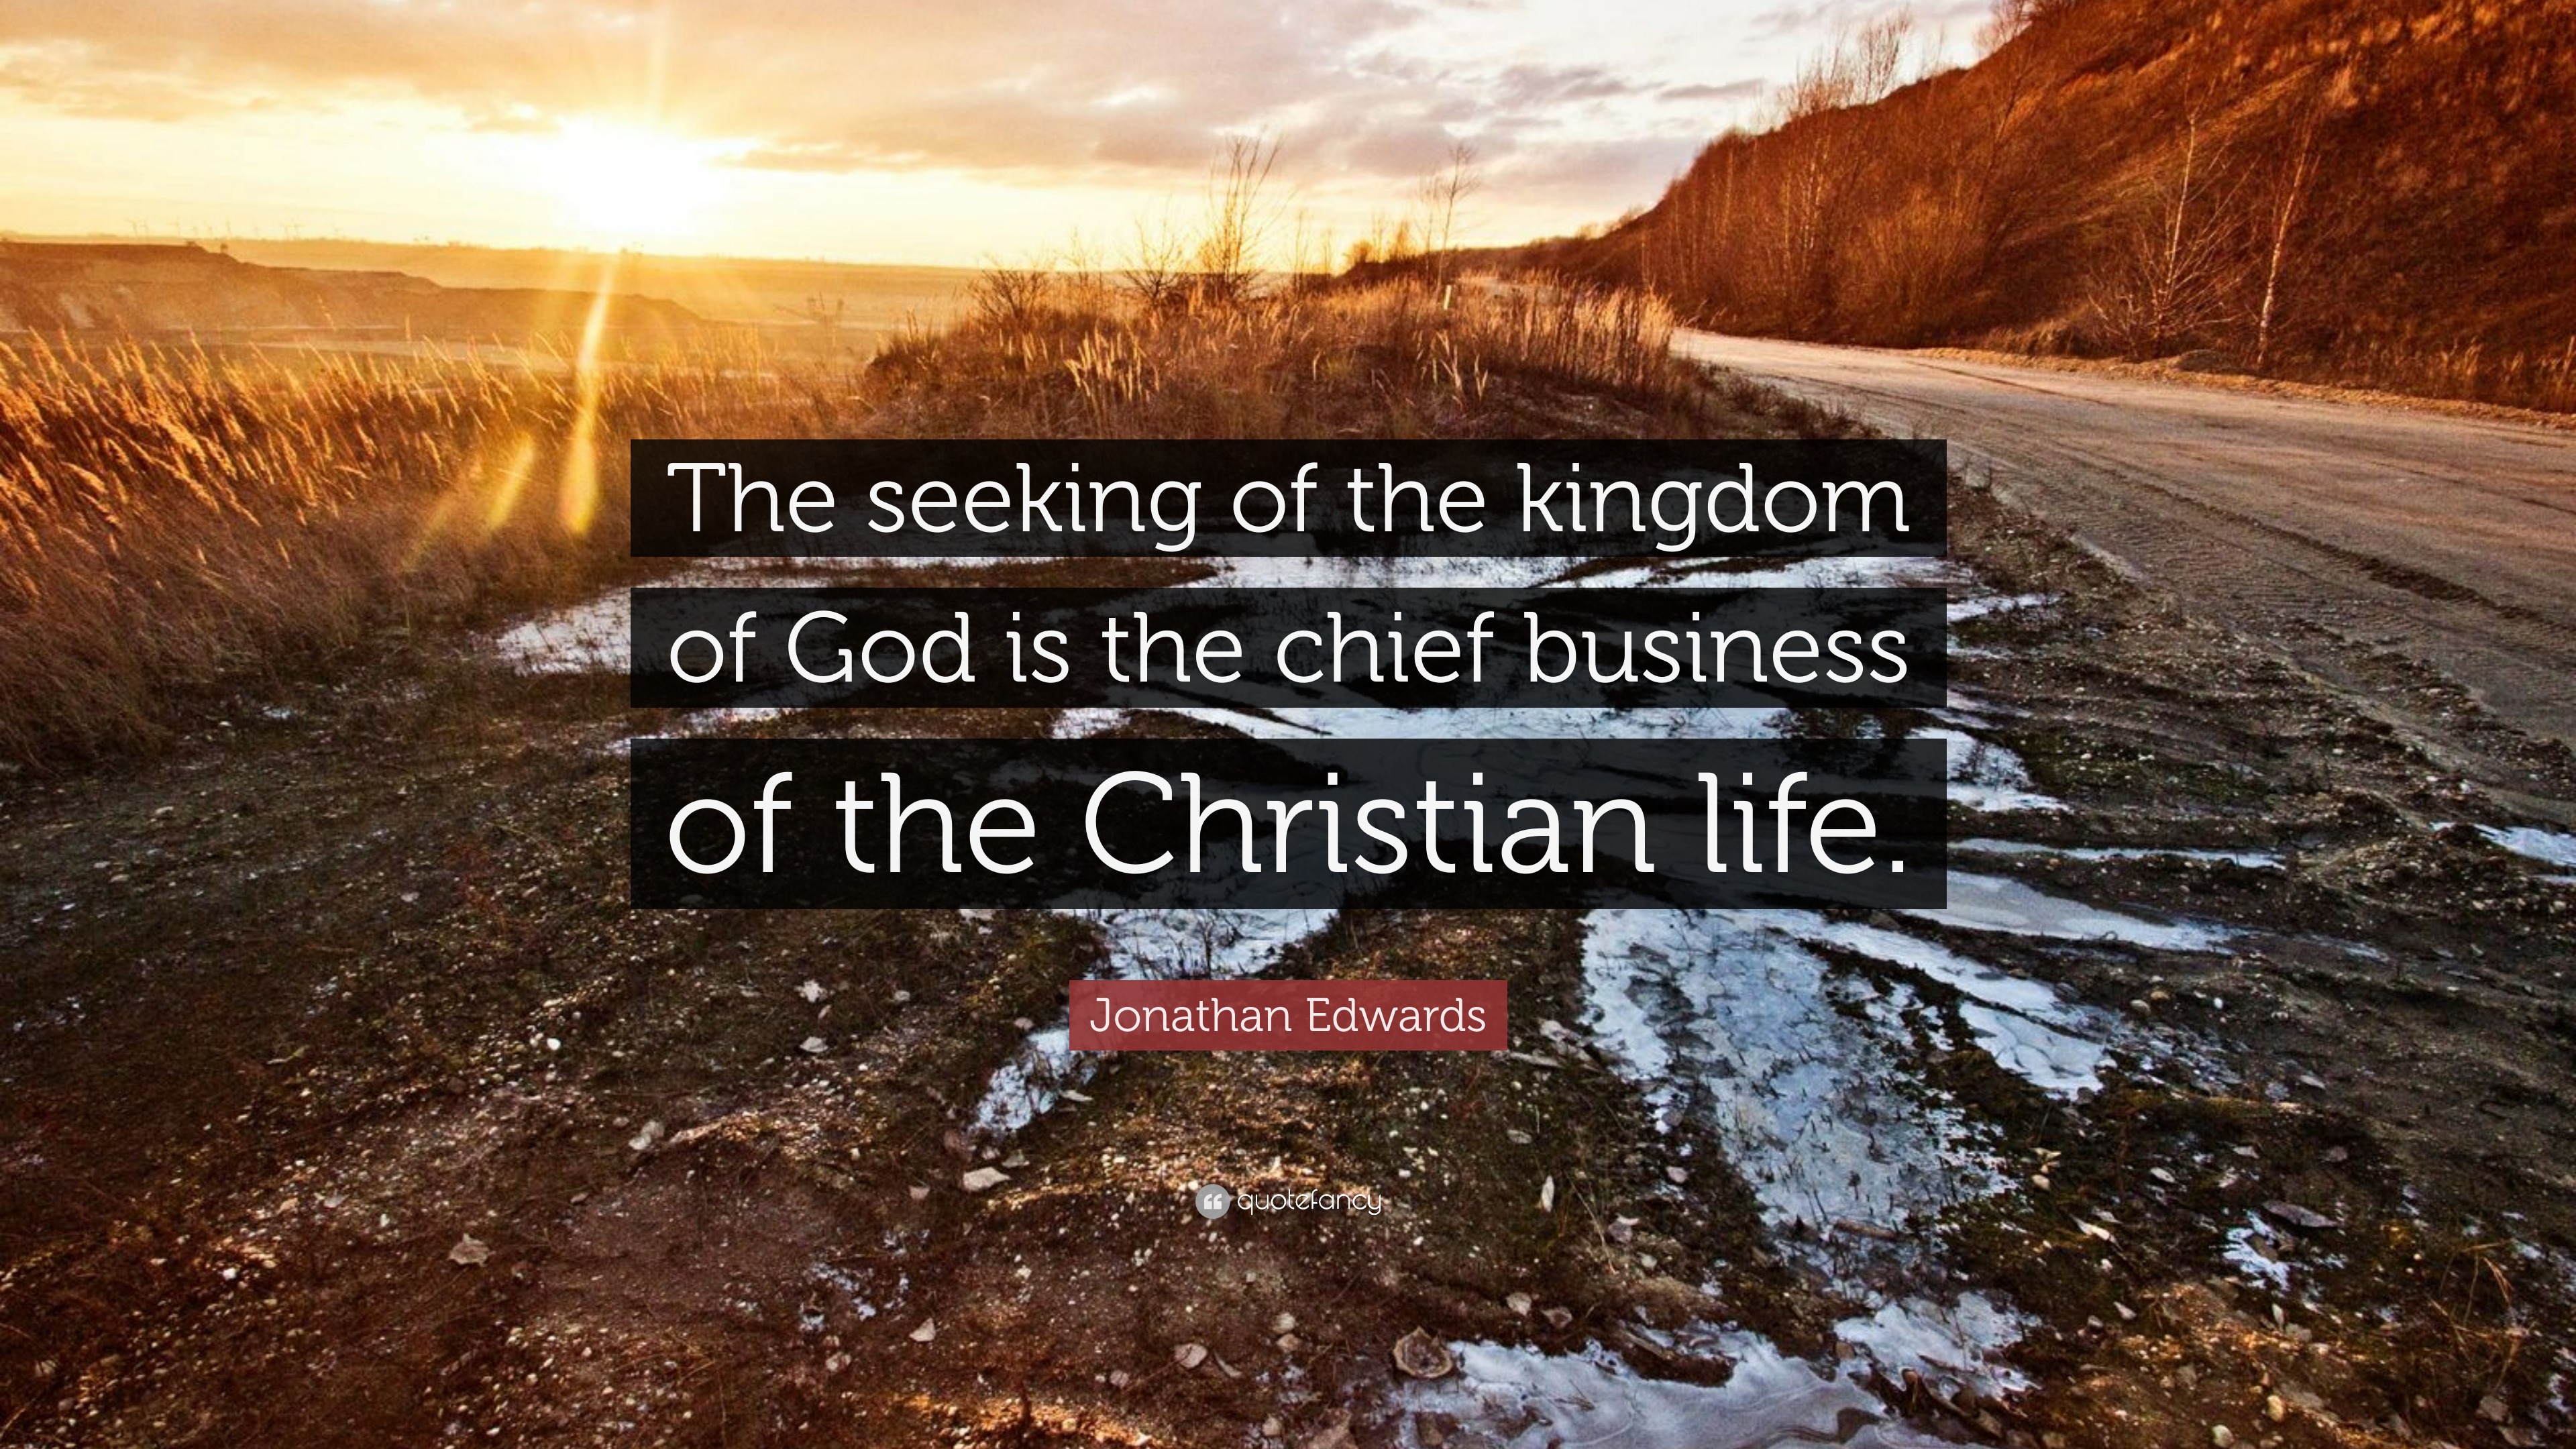 Jonathan Edwards Quote “The seeking of the kingdom of God